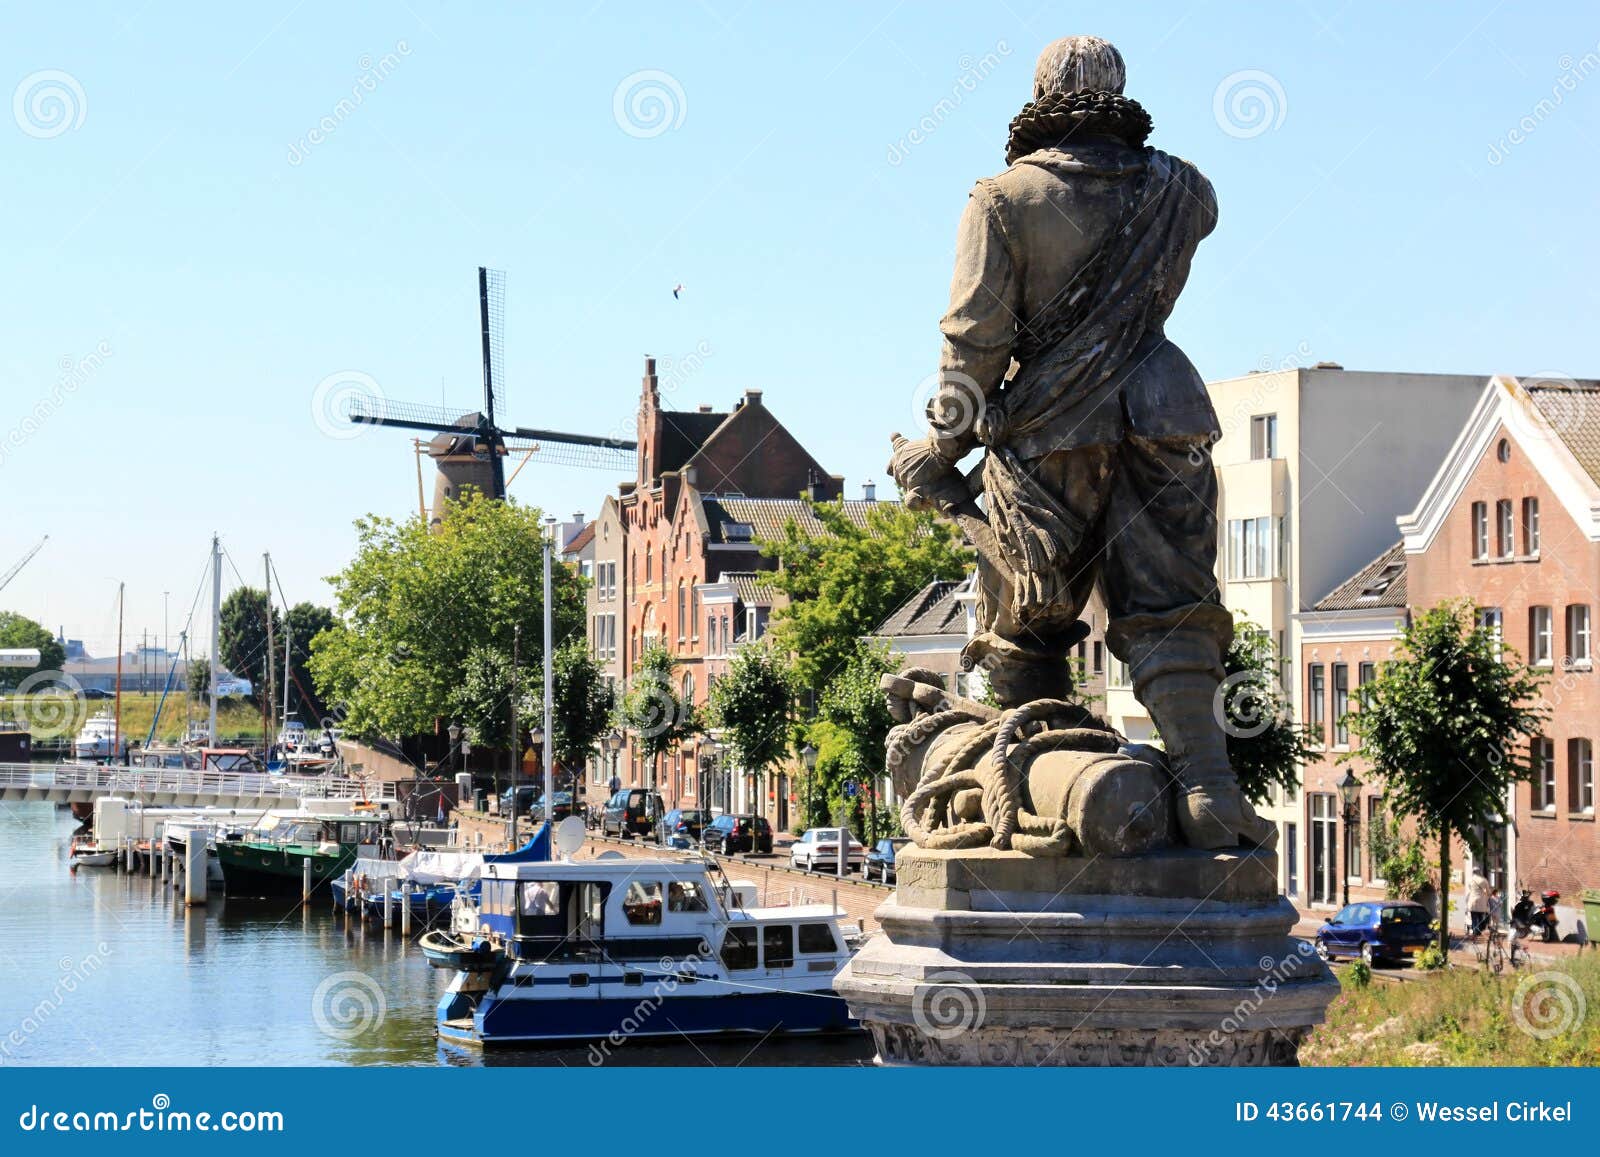 statue of piet heyn in delfshaven, netherlands